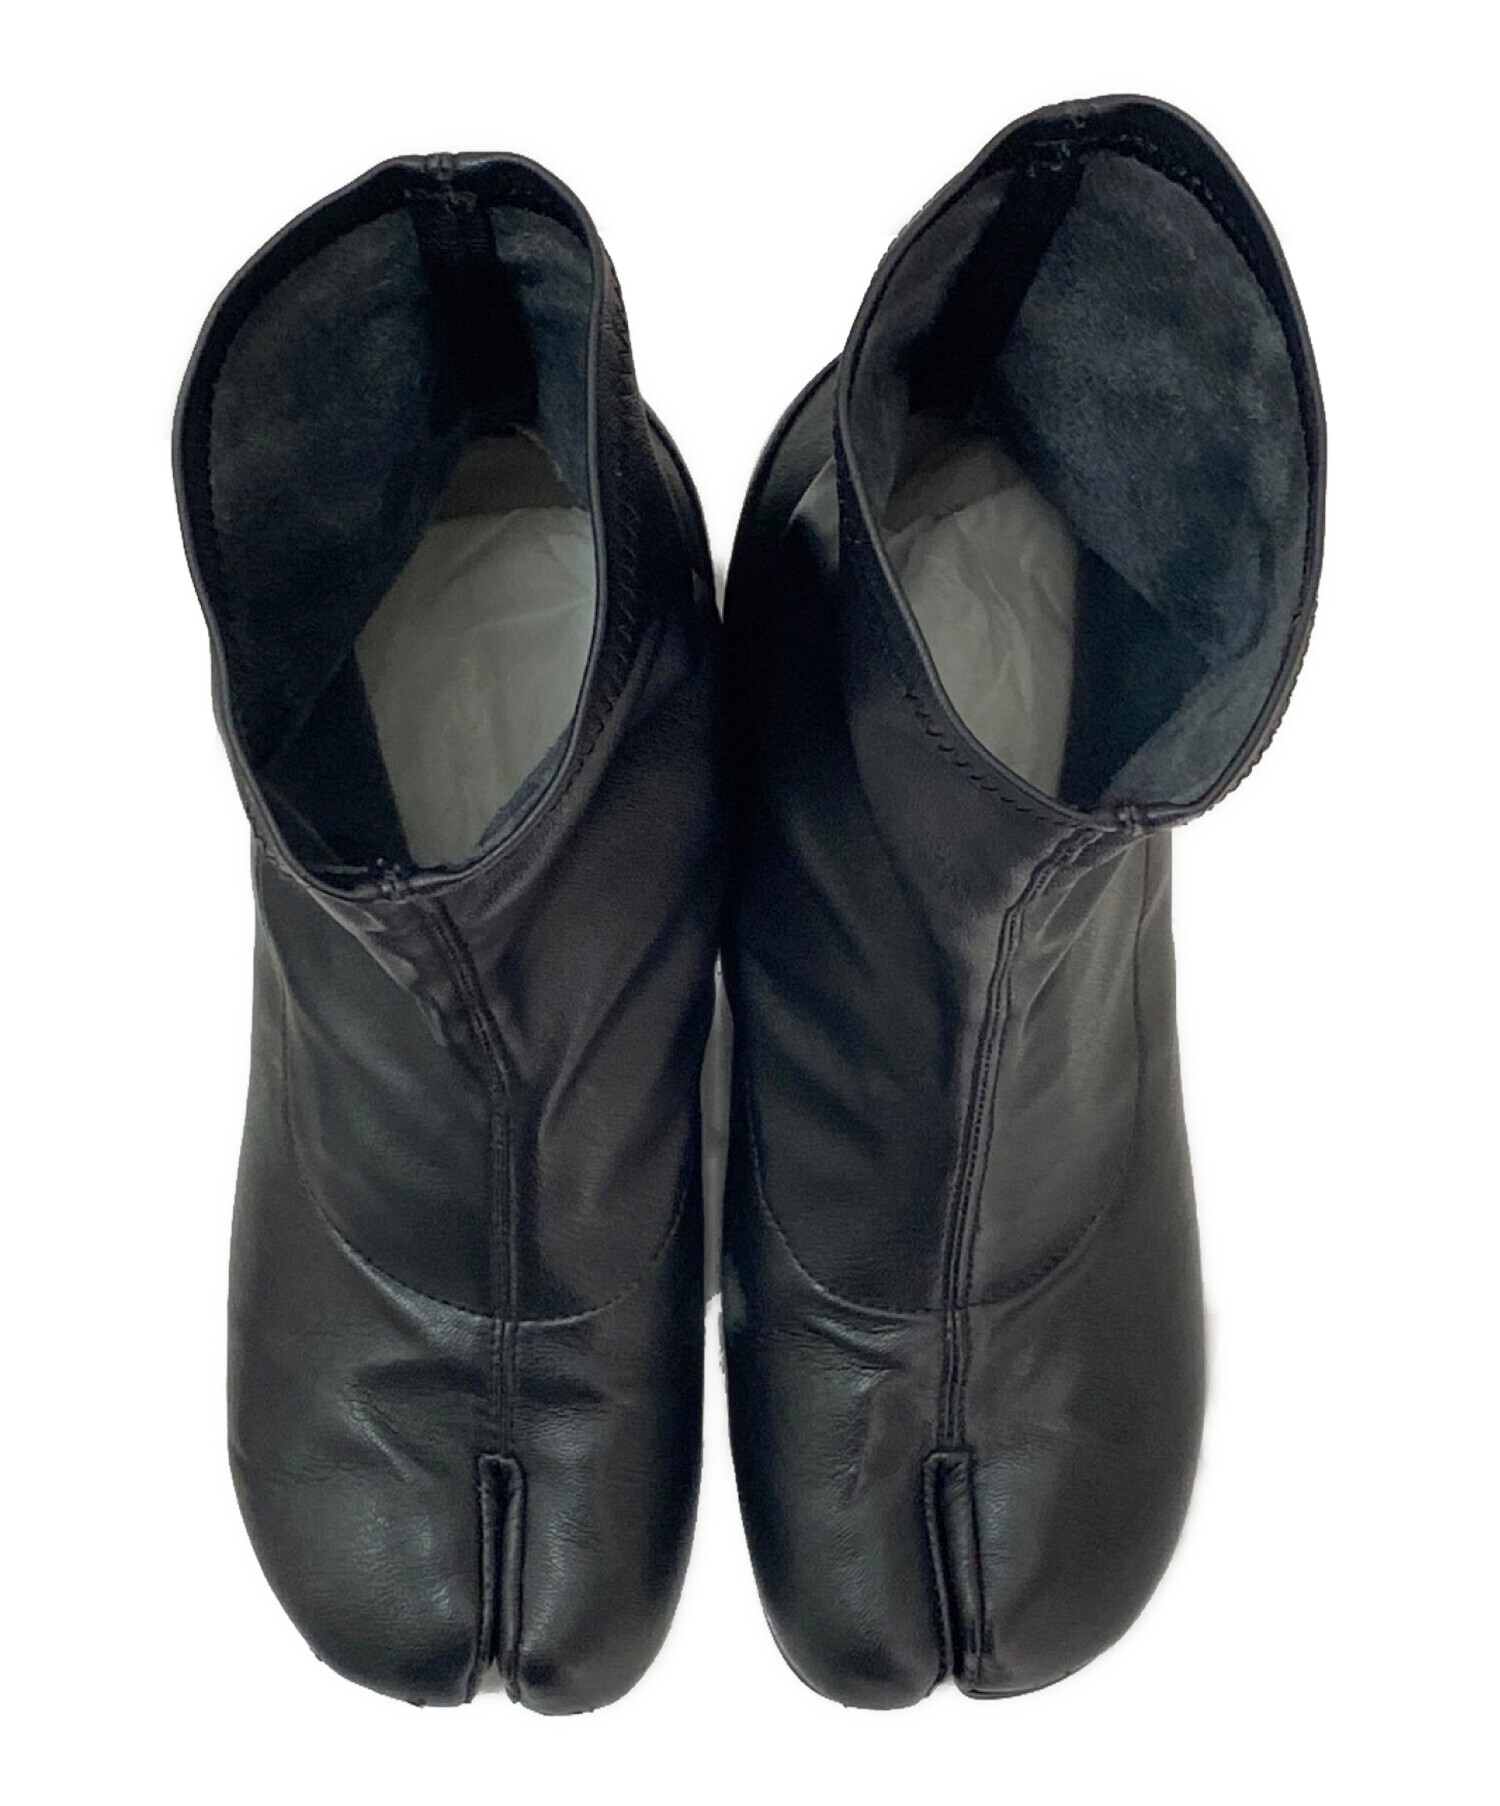 MM_ROE新品 Maison Margiela 足袋ブーツ 36 ブラック 黒 Tabi - ブーツ